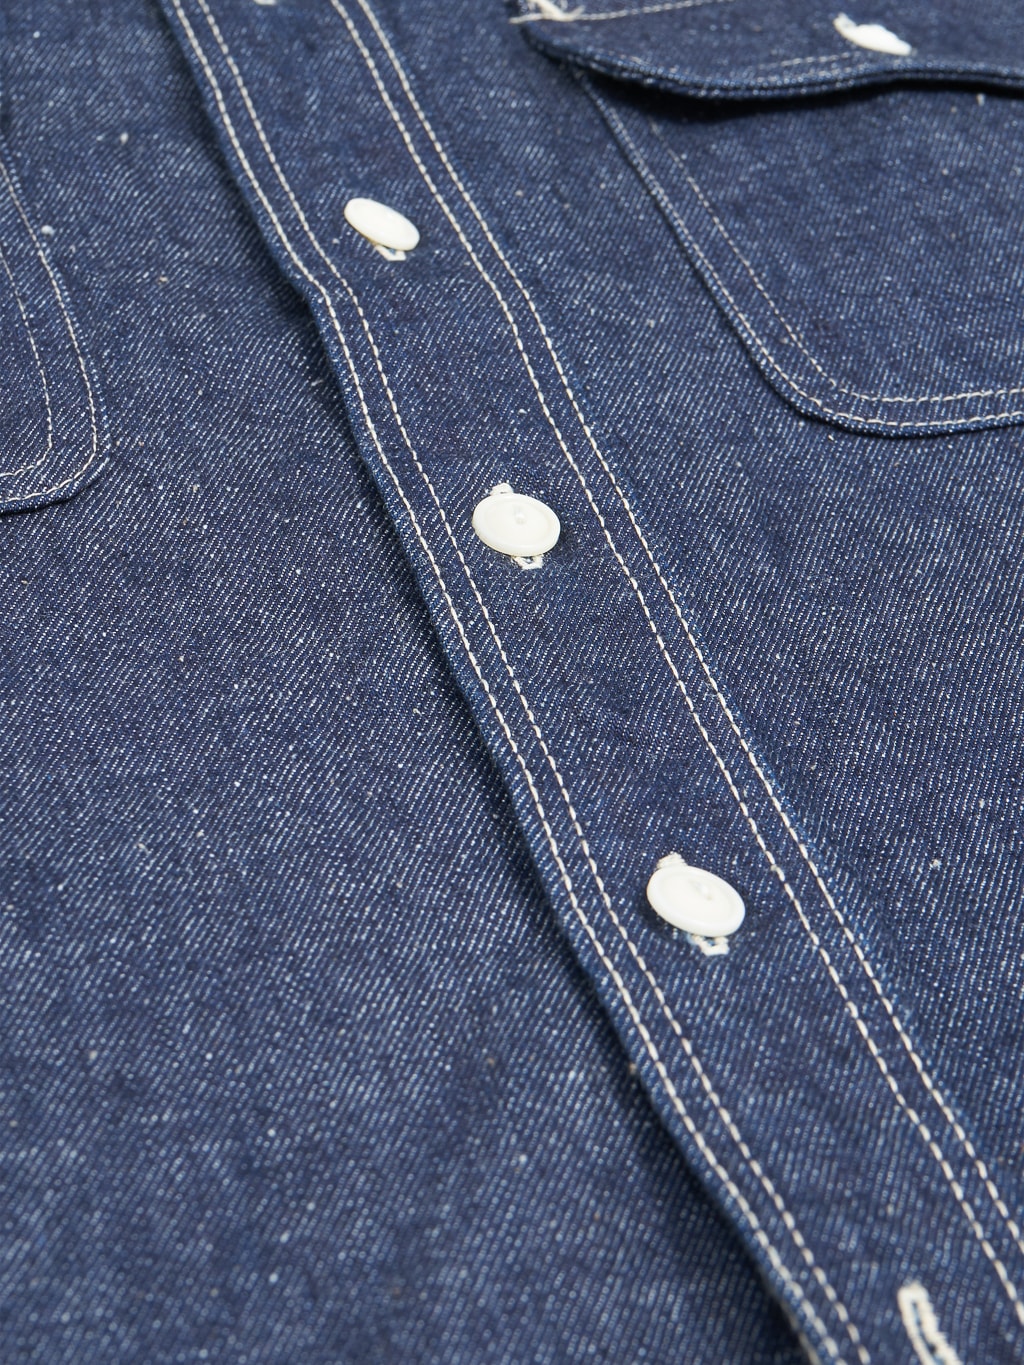 Samurai jeans denim work shirt texture